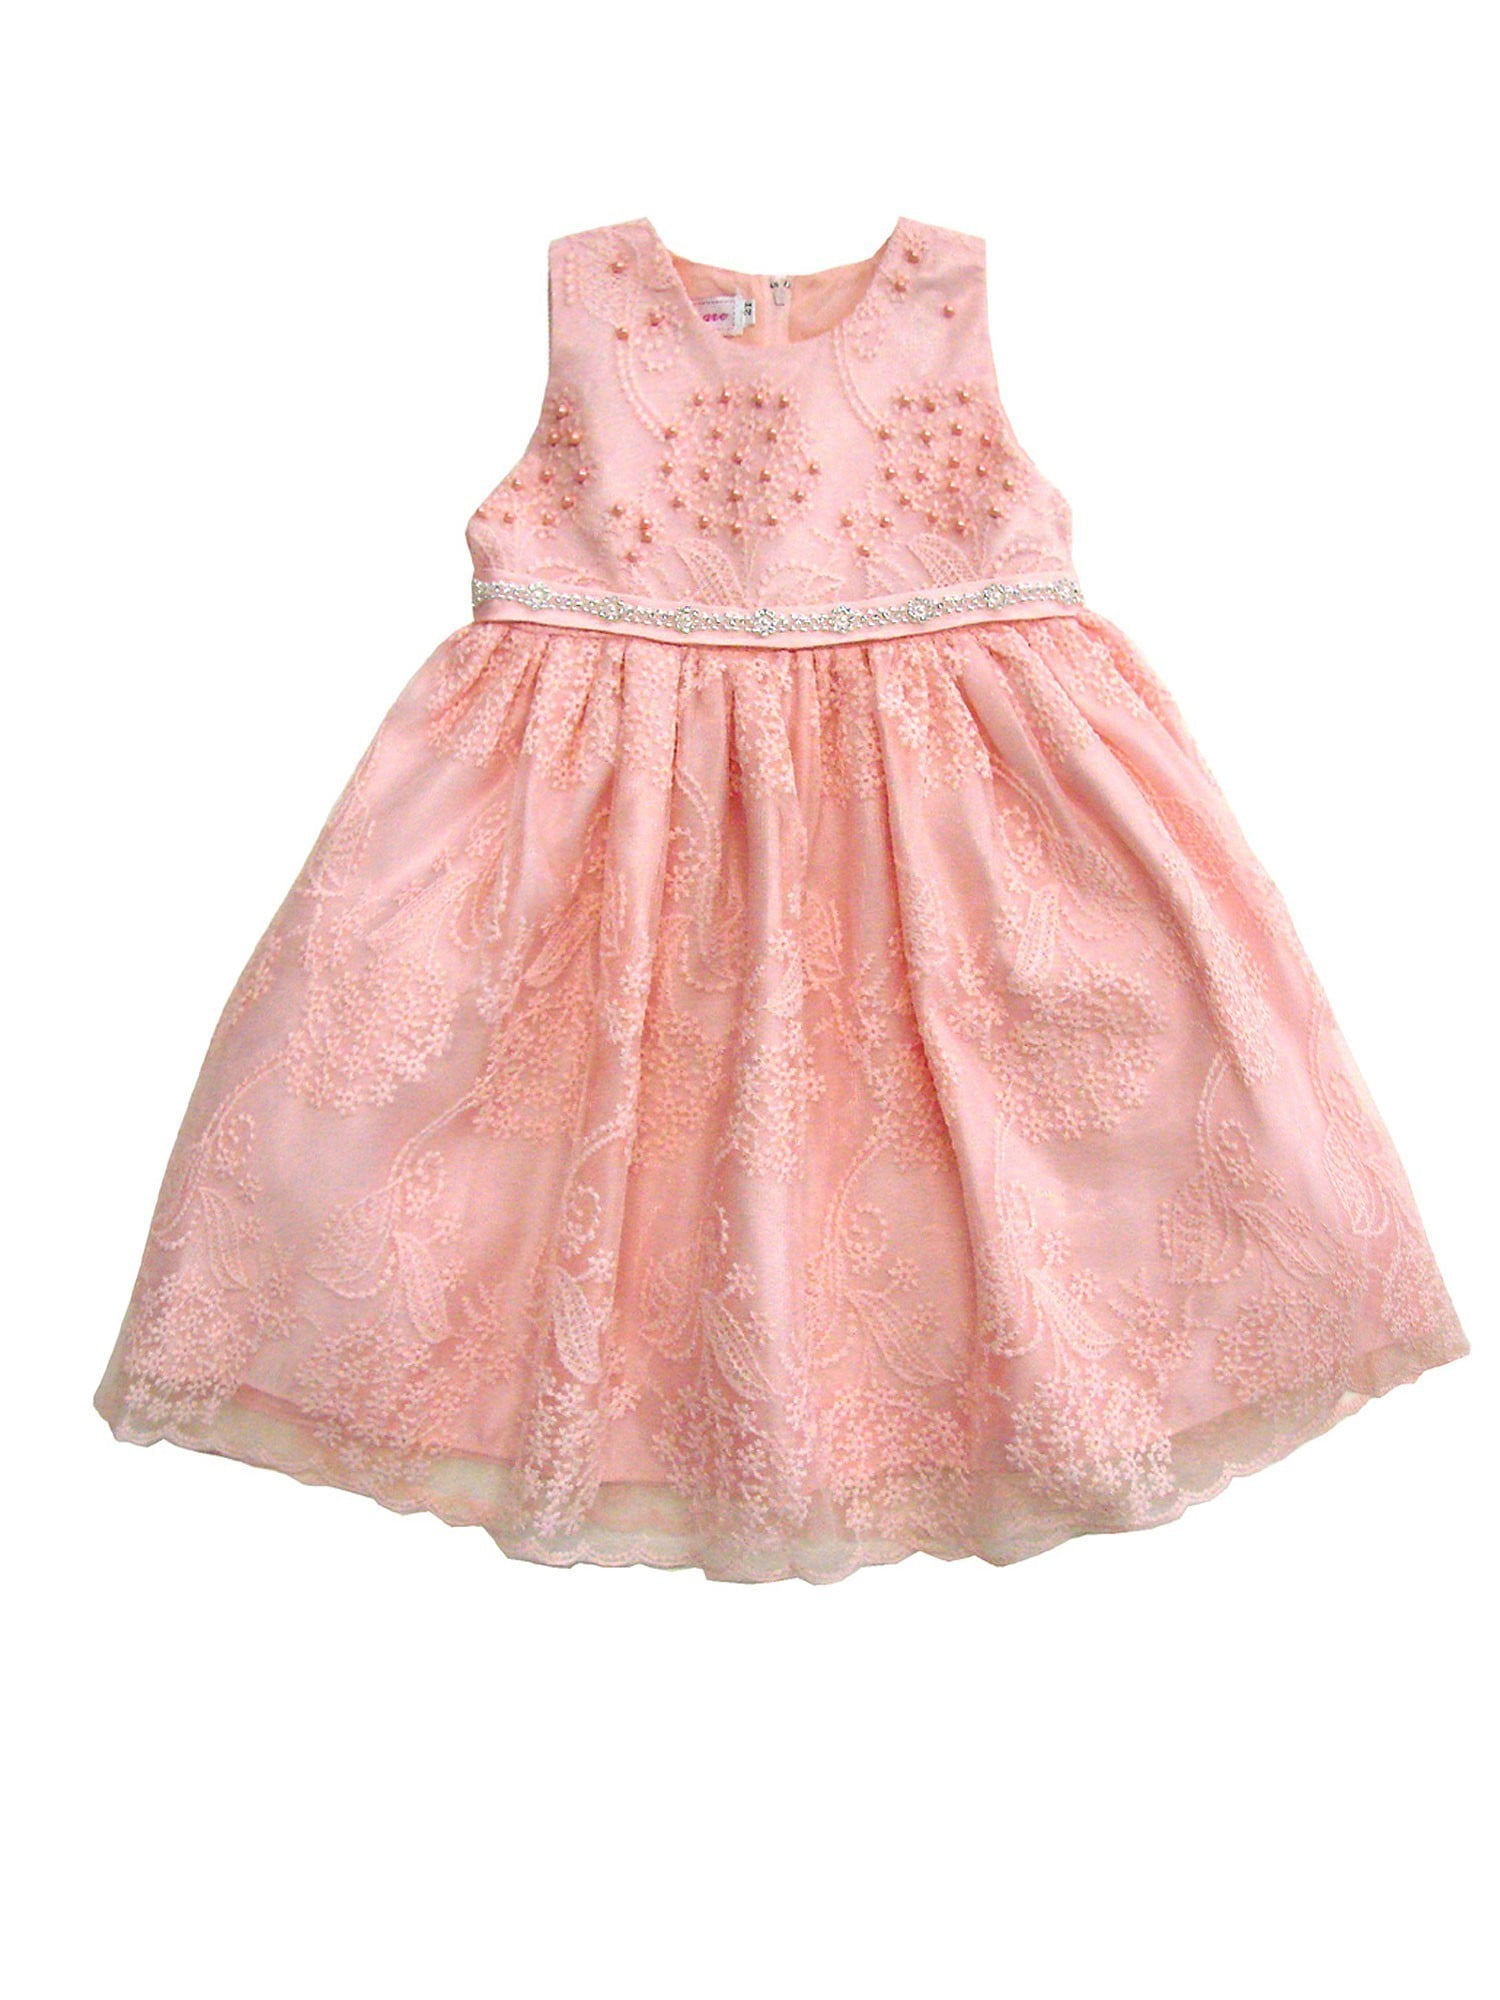 S. Square - Baby Girls Blush Pink Pearls Rhinestones Flower Girl Dress ...